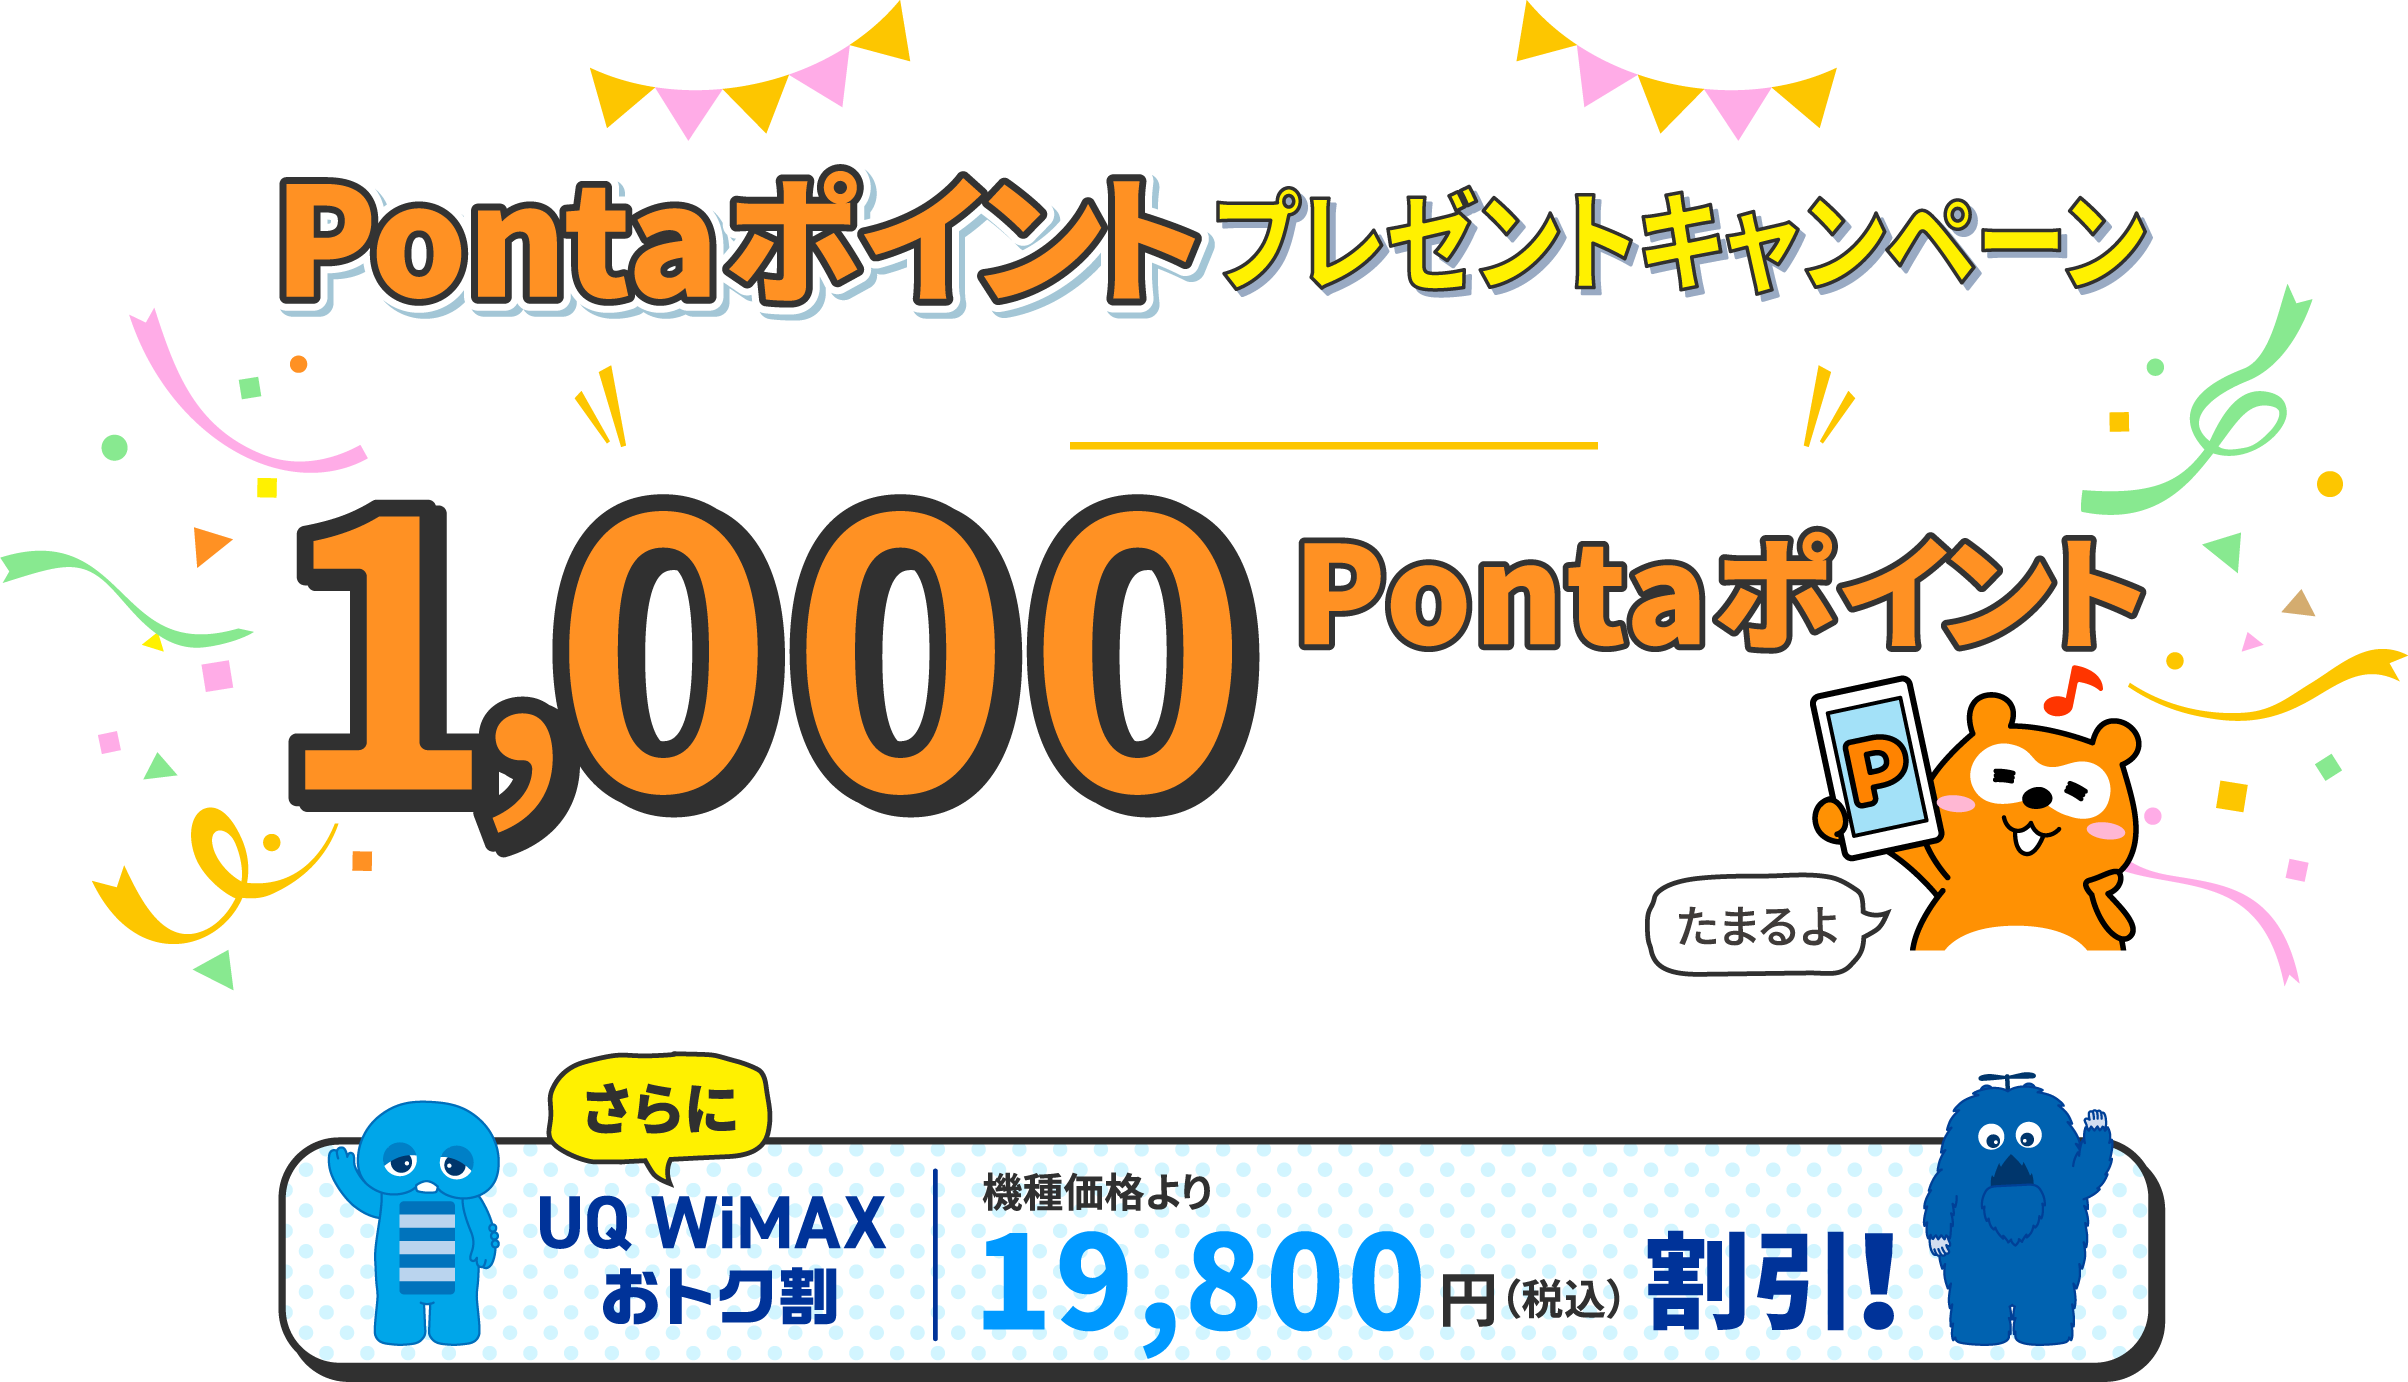 UQ WiMAX　UQ WiMAX Pontaポイントプレゼントキャンペーン　新規契約時にau IDを新規登録すると1,000Pontaポイントプレゼント　期間2024年6月4日（火）10:00～ 終了日未定 ※店頭での受付開始は2024年7月1日（月）～　さらにUQ WiMAXおトク割　機種価格より19,800円（税込）割引！